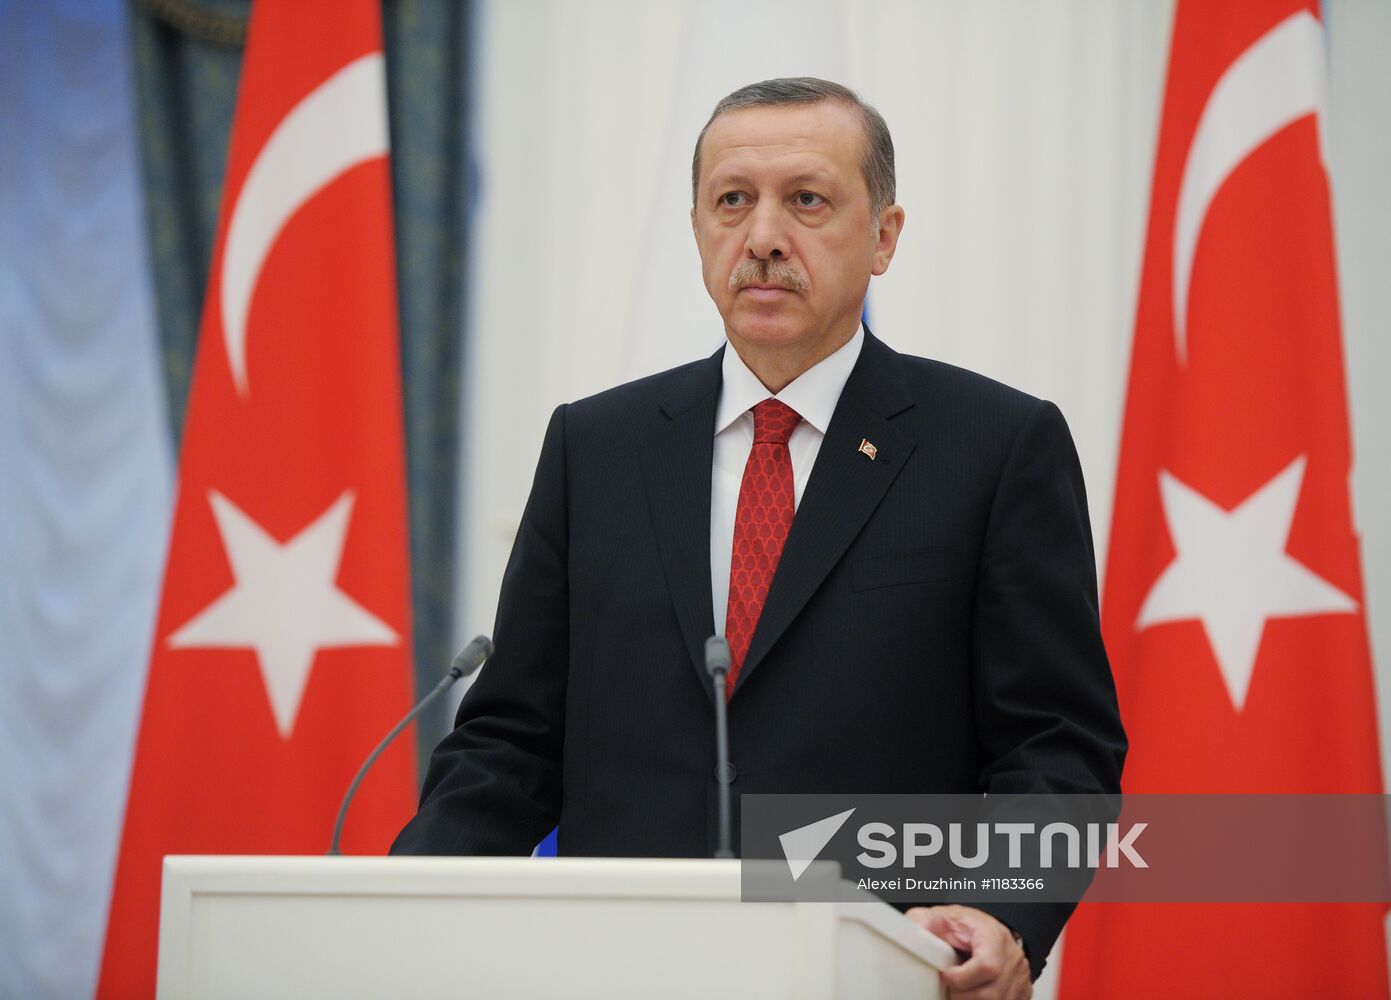 Vladimir Putin and Recep Erdoğan hold joint press conference